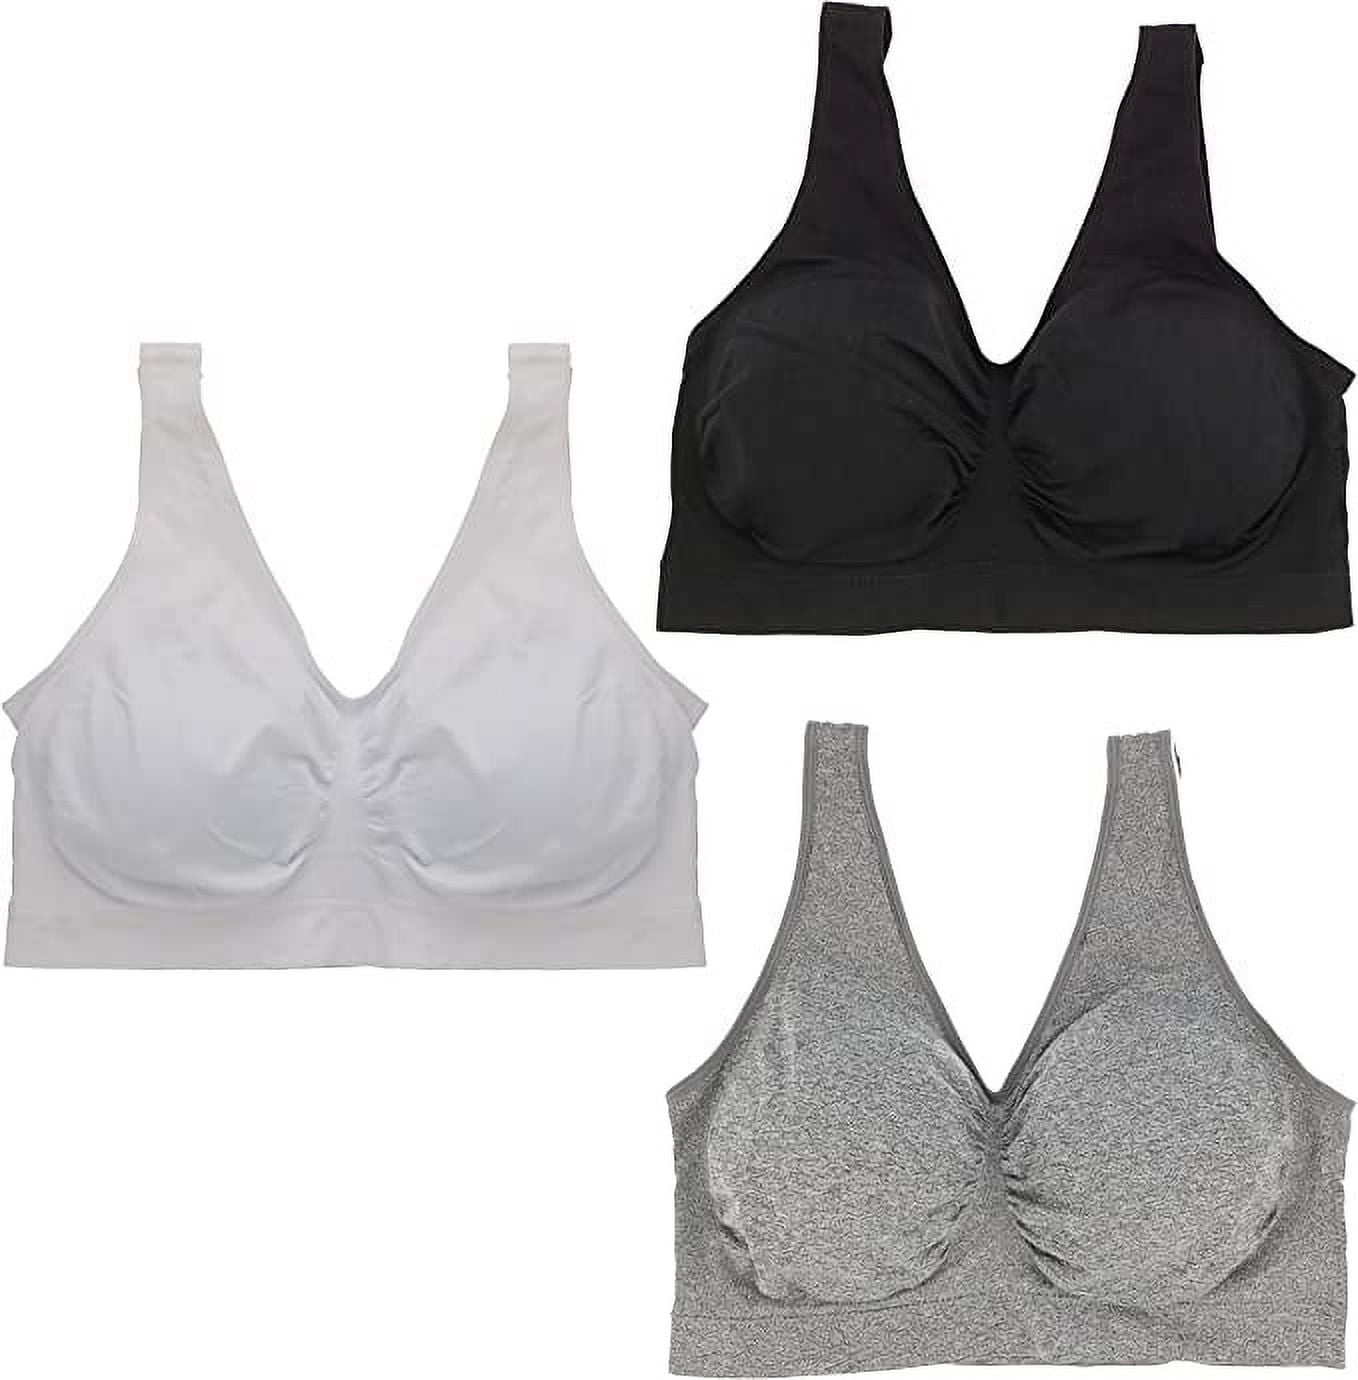 Delta Burke Intimates Women's Plus-Size Seamless Comfort Bra - 3 Pack ...